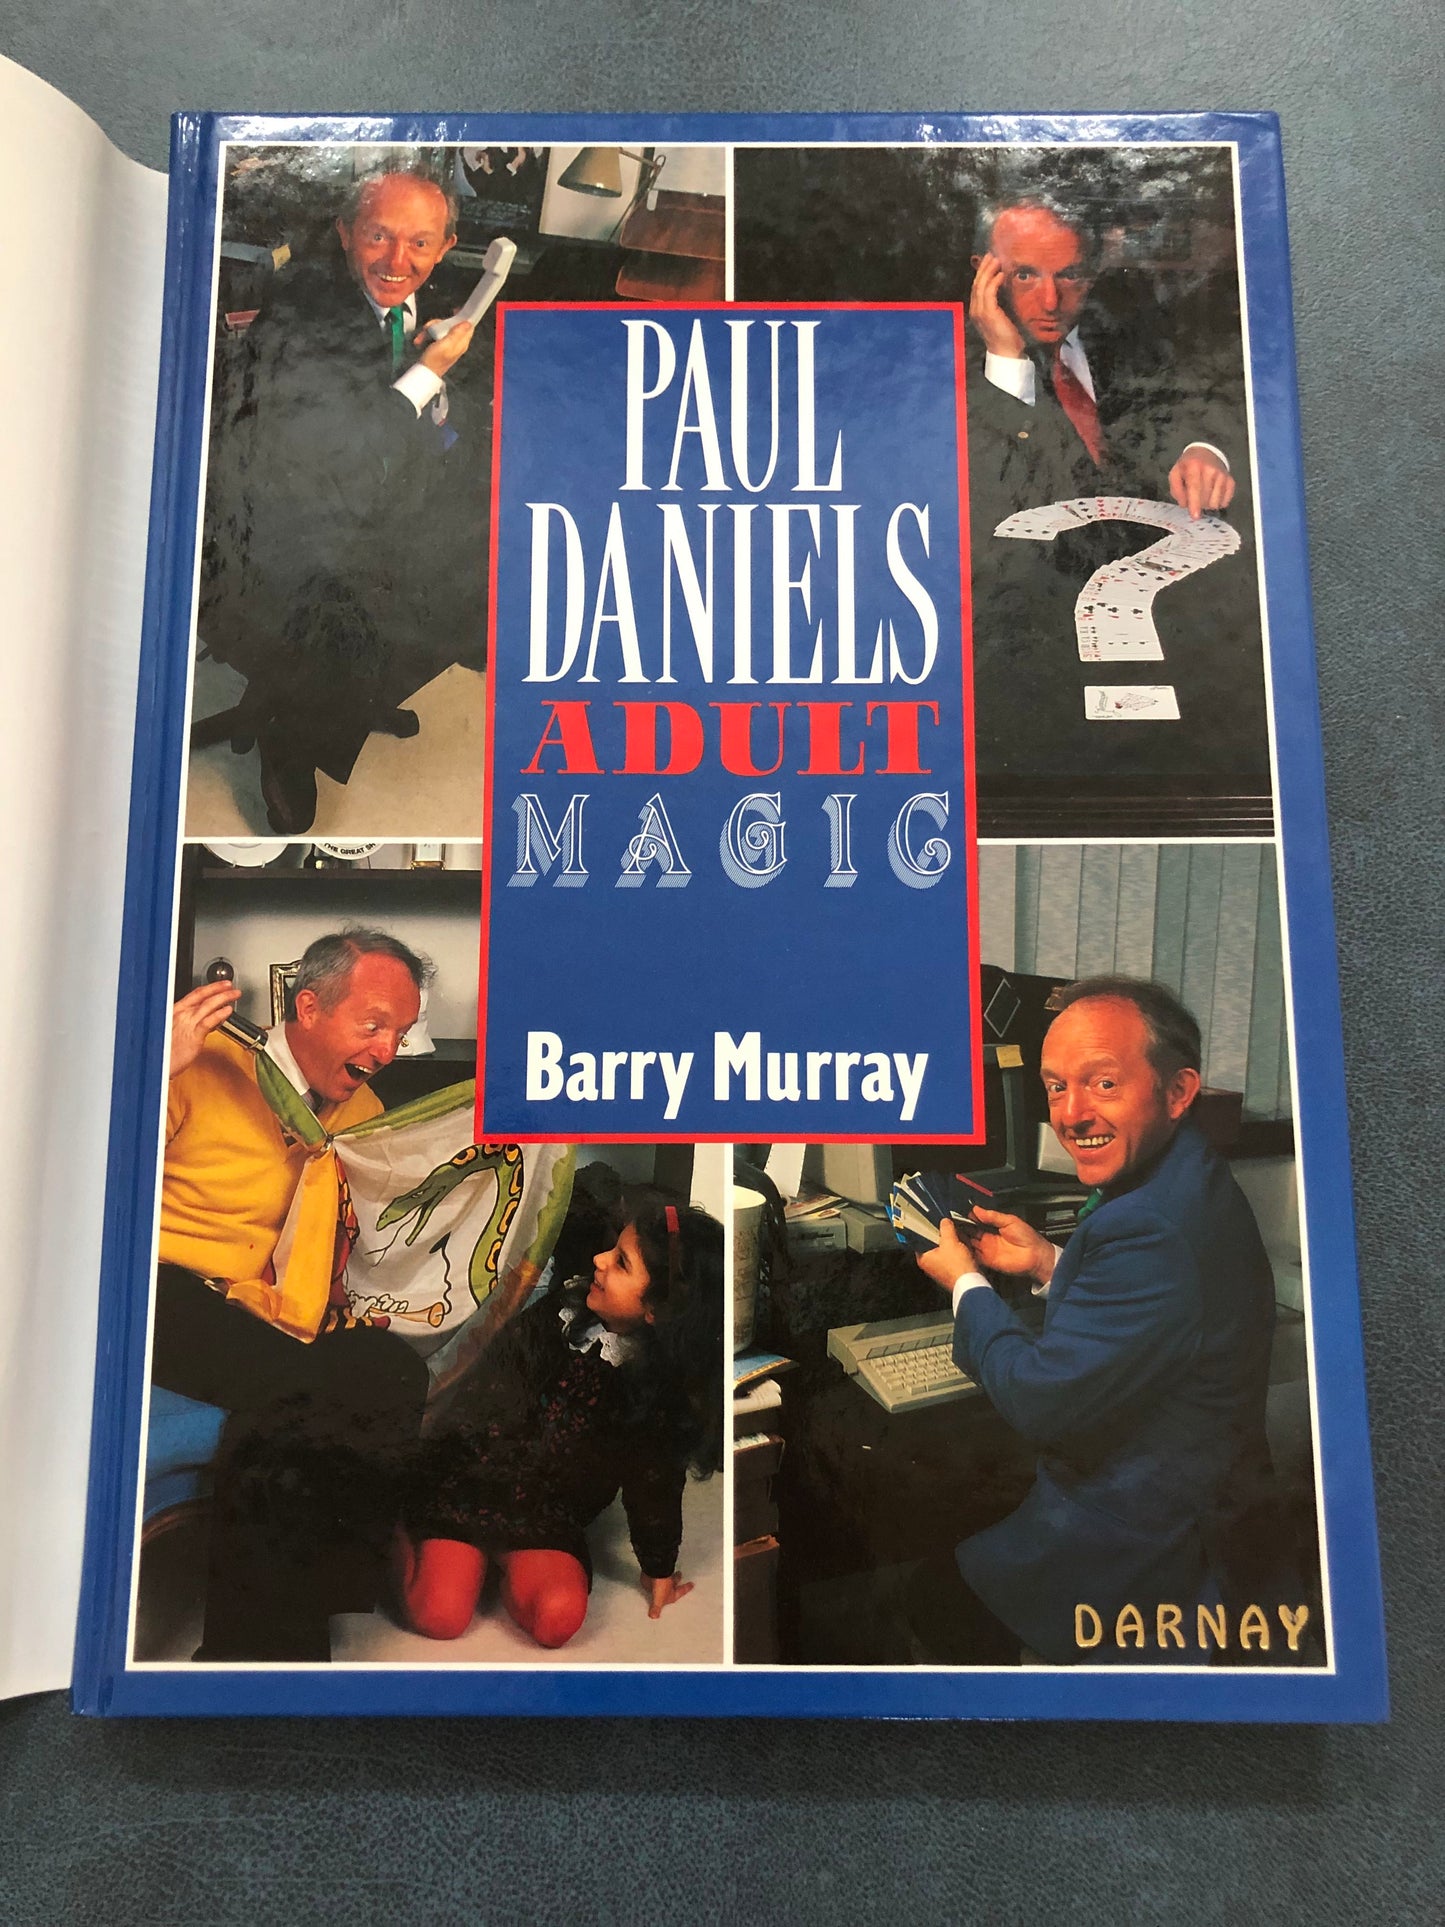 Paul Daniels Adult Magic (Hardcover or Paperback) - Barry Murray